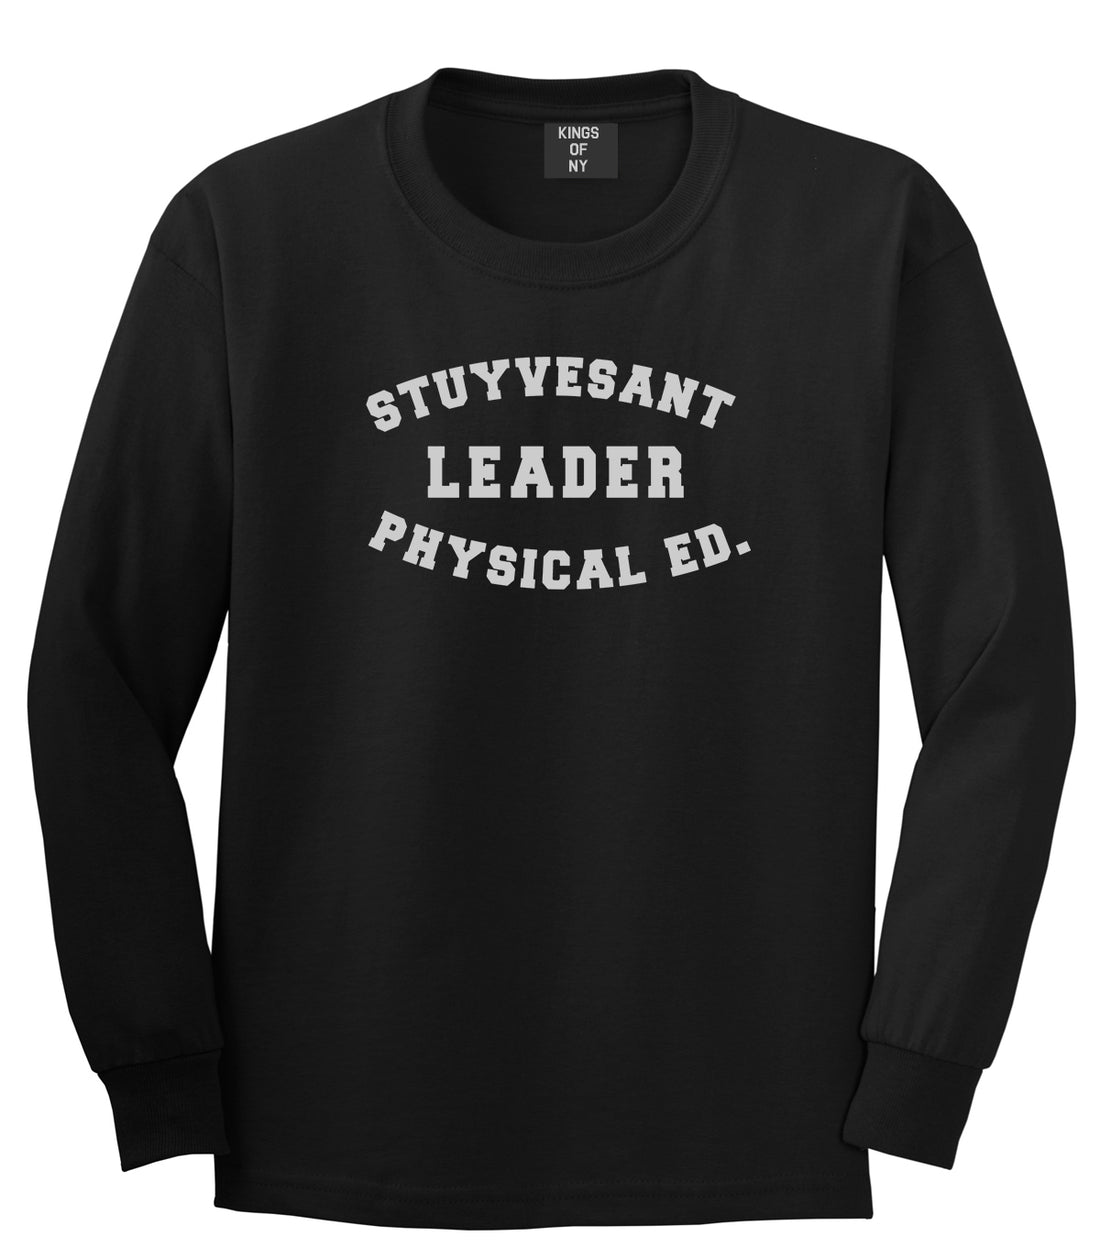 Stuyvesant Leader Physical Ed Mens Long Sleeve T-Shirt Black